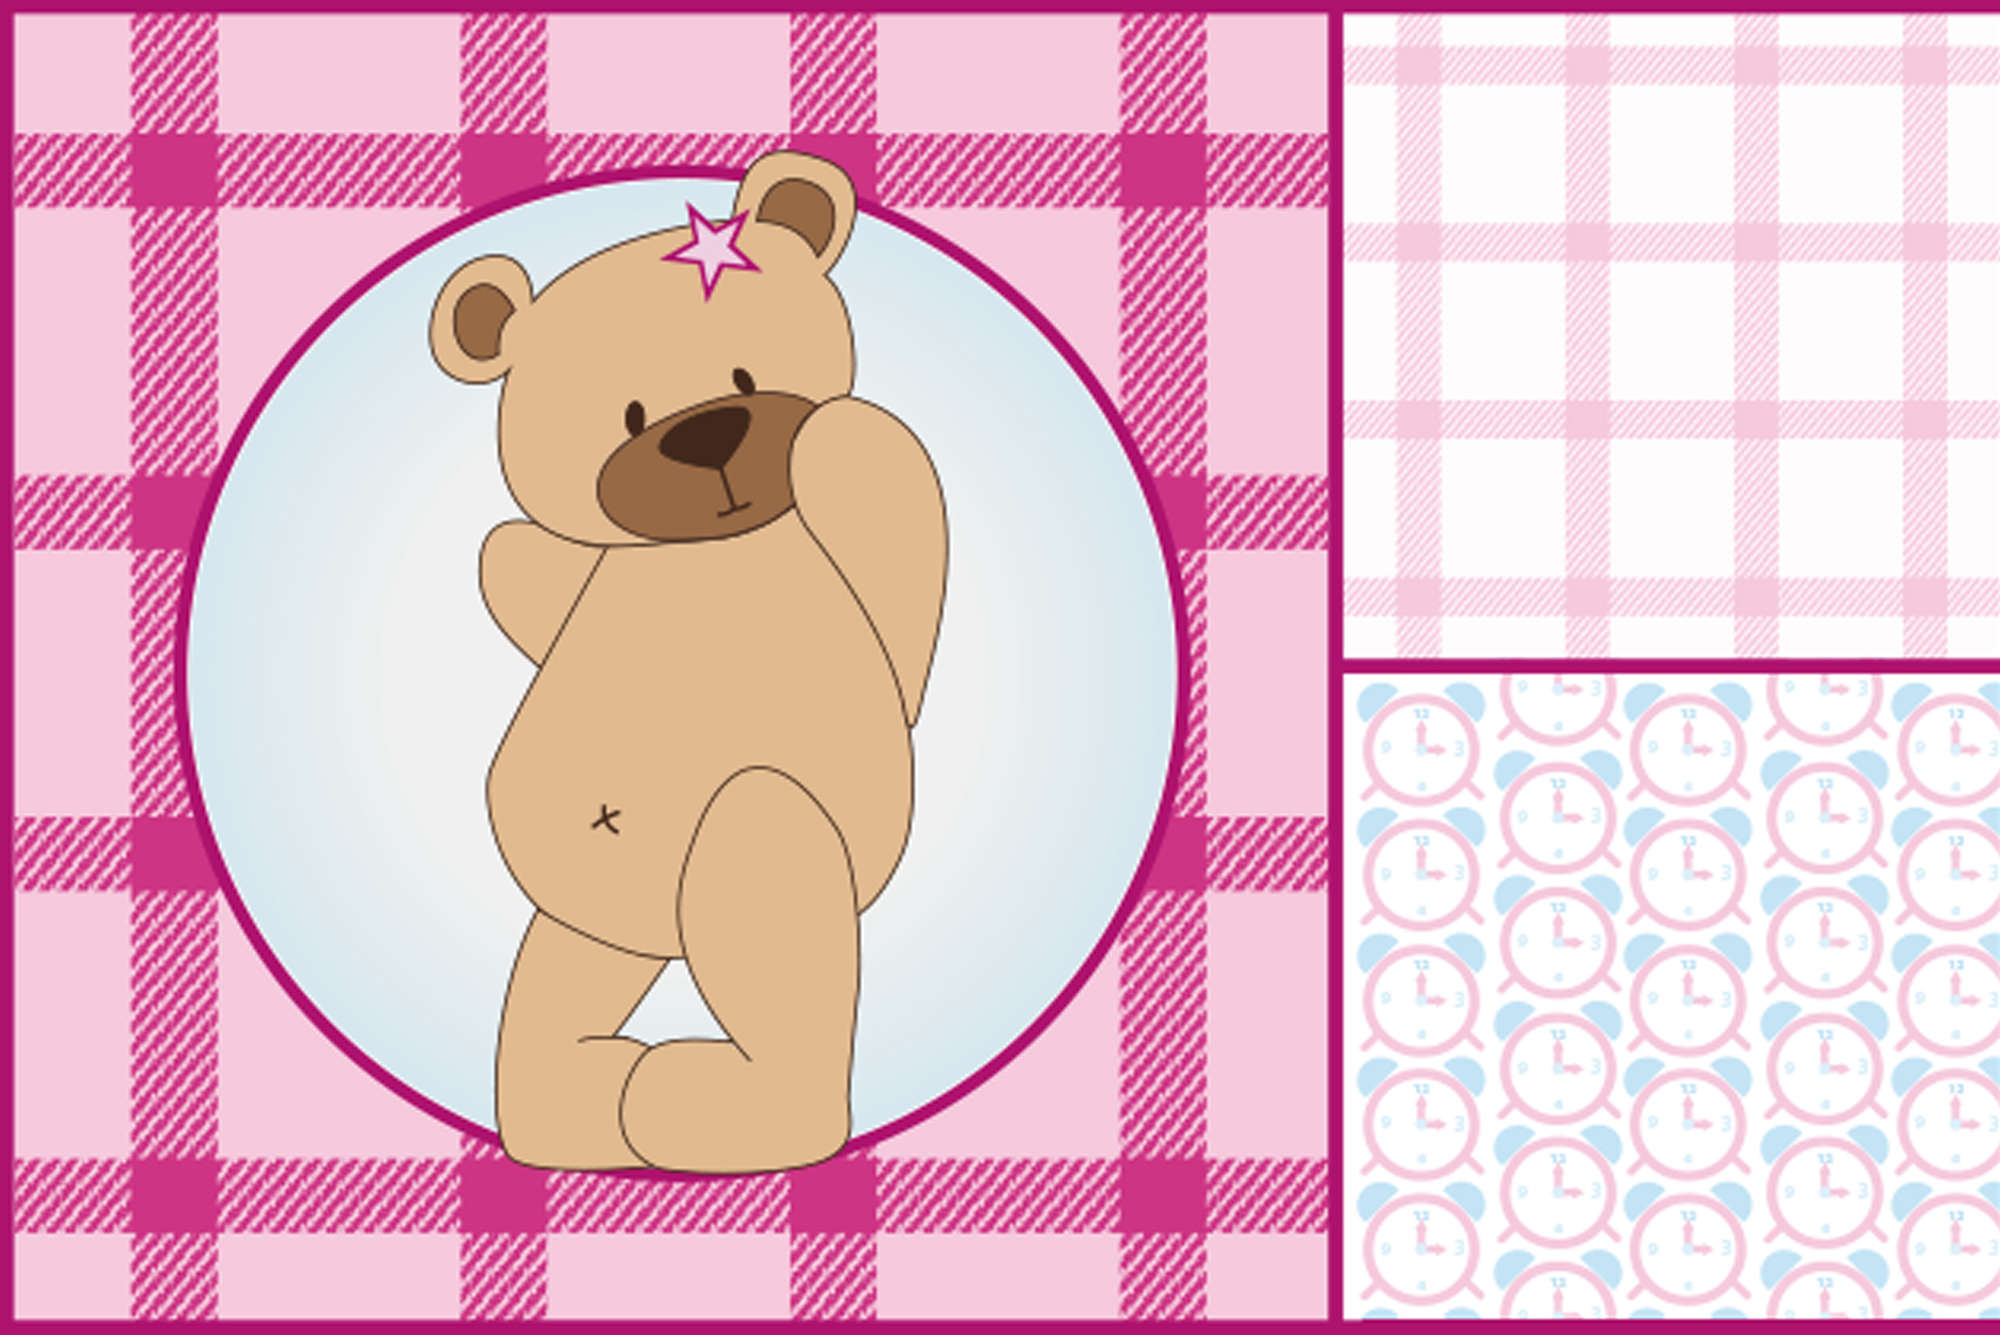             Fototapete Teddybär im Kinderdesign – Perlmutt Glattvlies
        